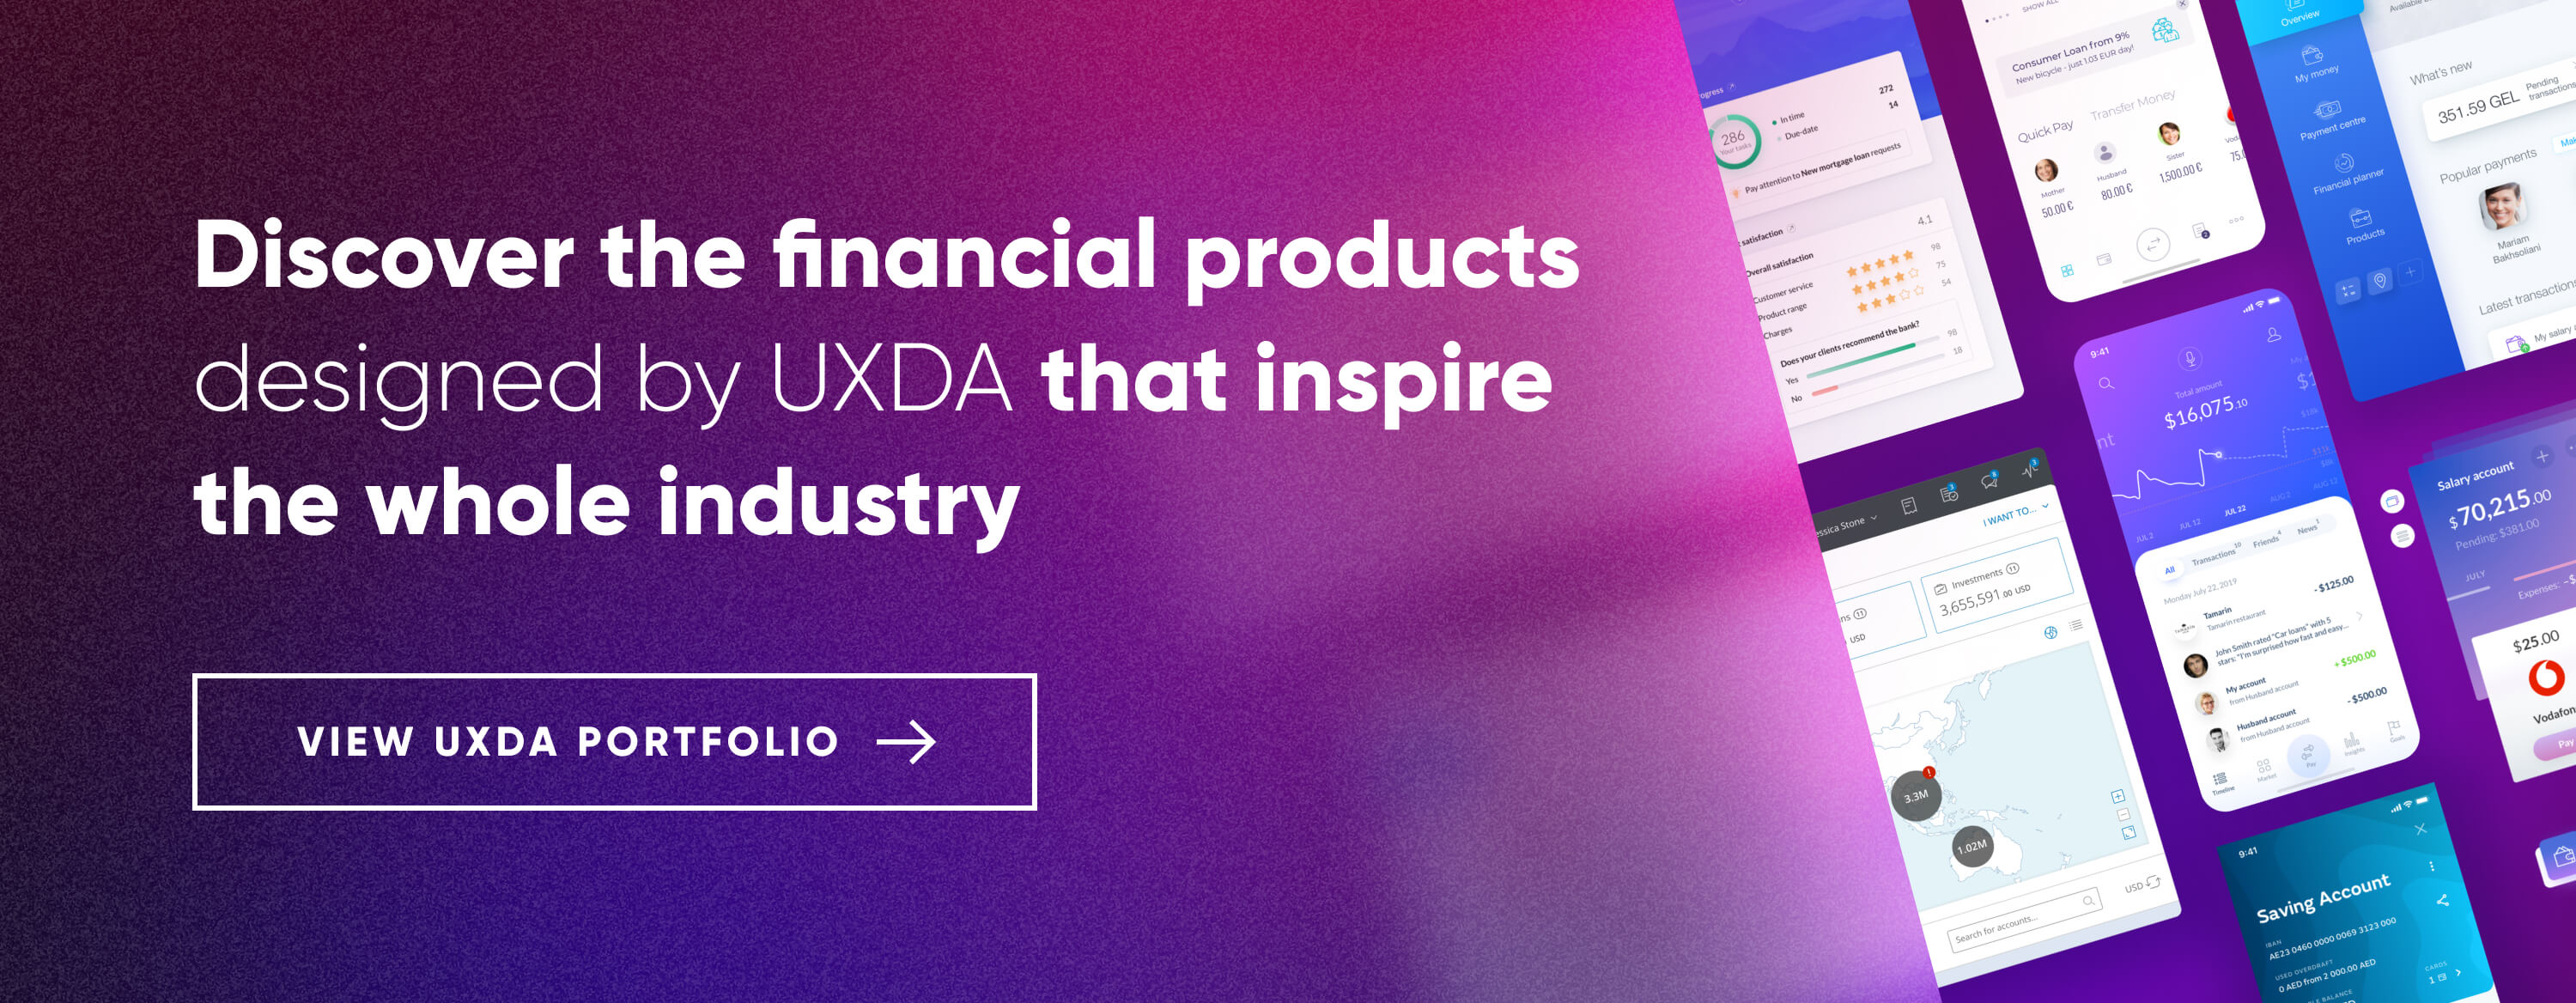 uxda-portfolio-financial-digital-product-inspire-industry-ux-1669631478.jpg